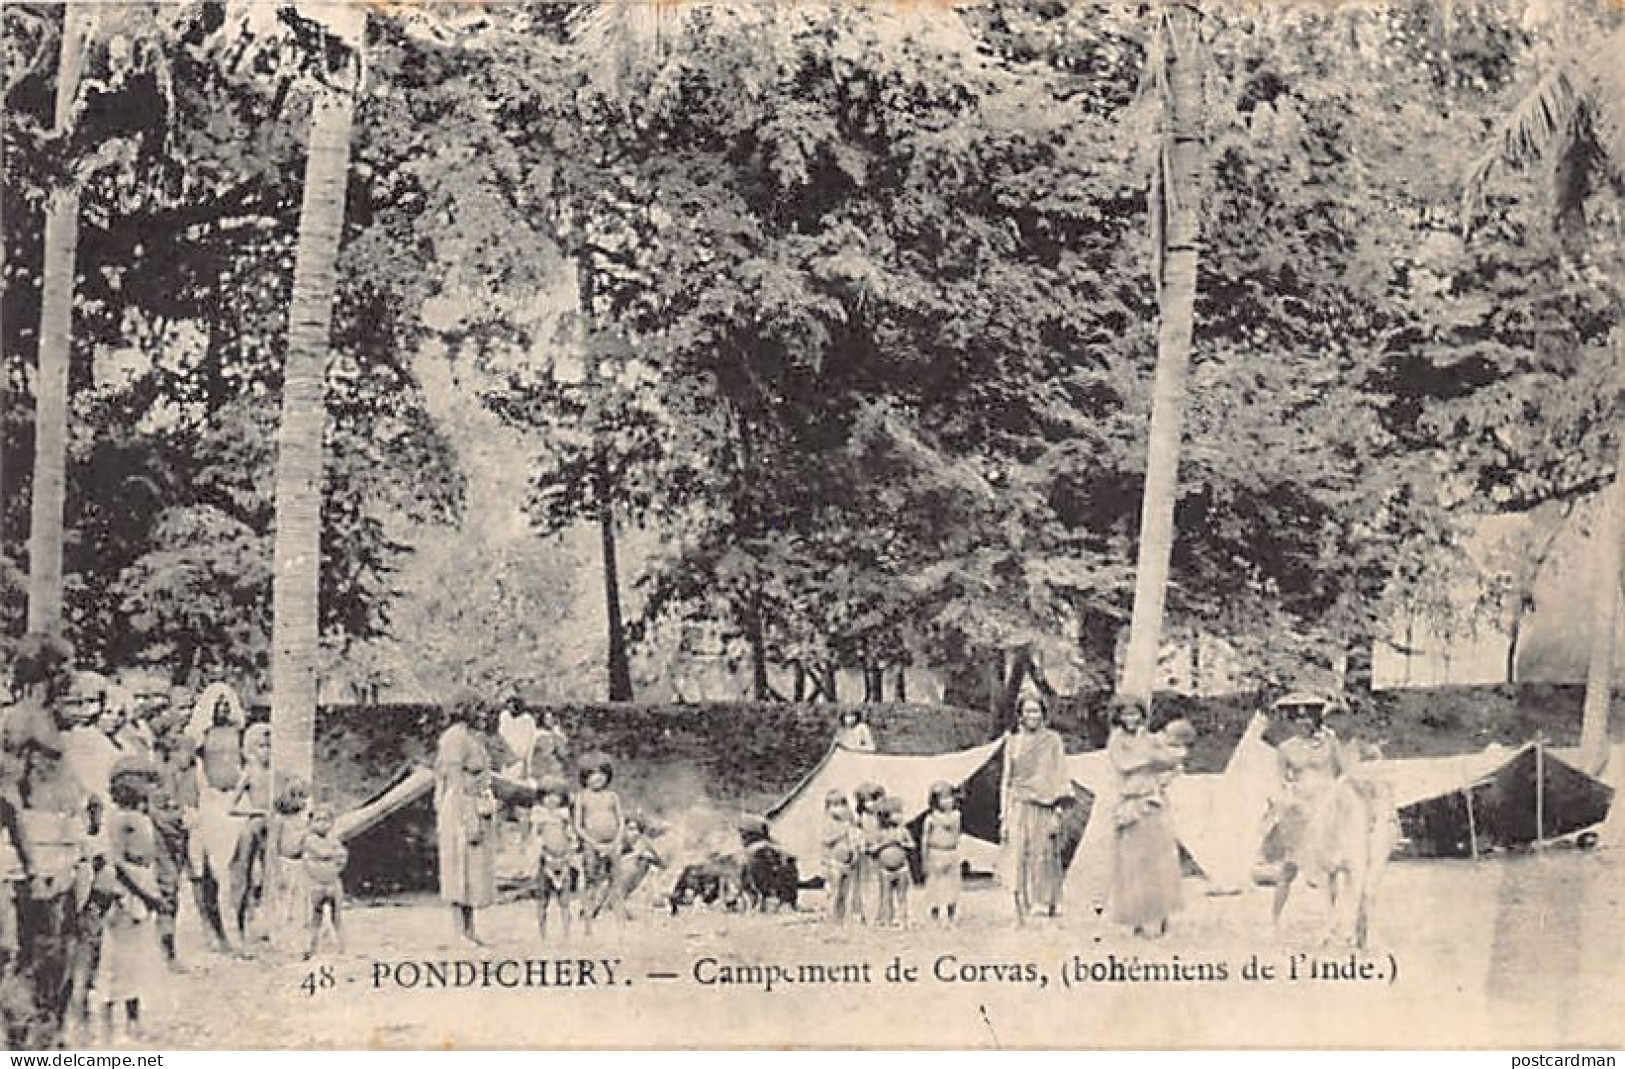 India - PUDUCHERRY Pondichéry - Corvas I.e. Indian Gypsies - India